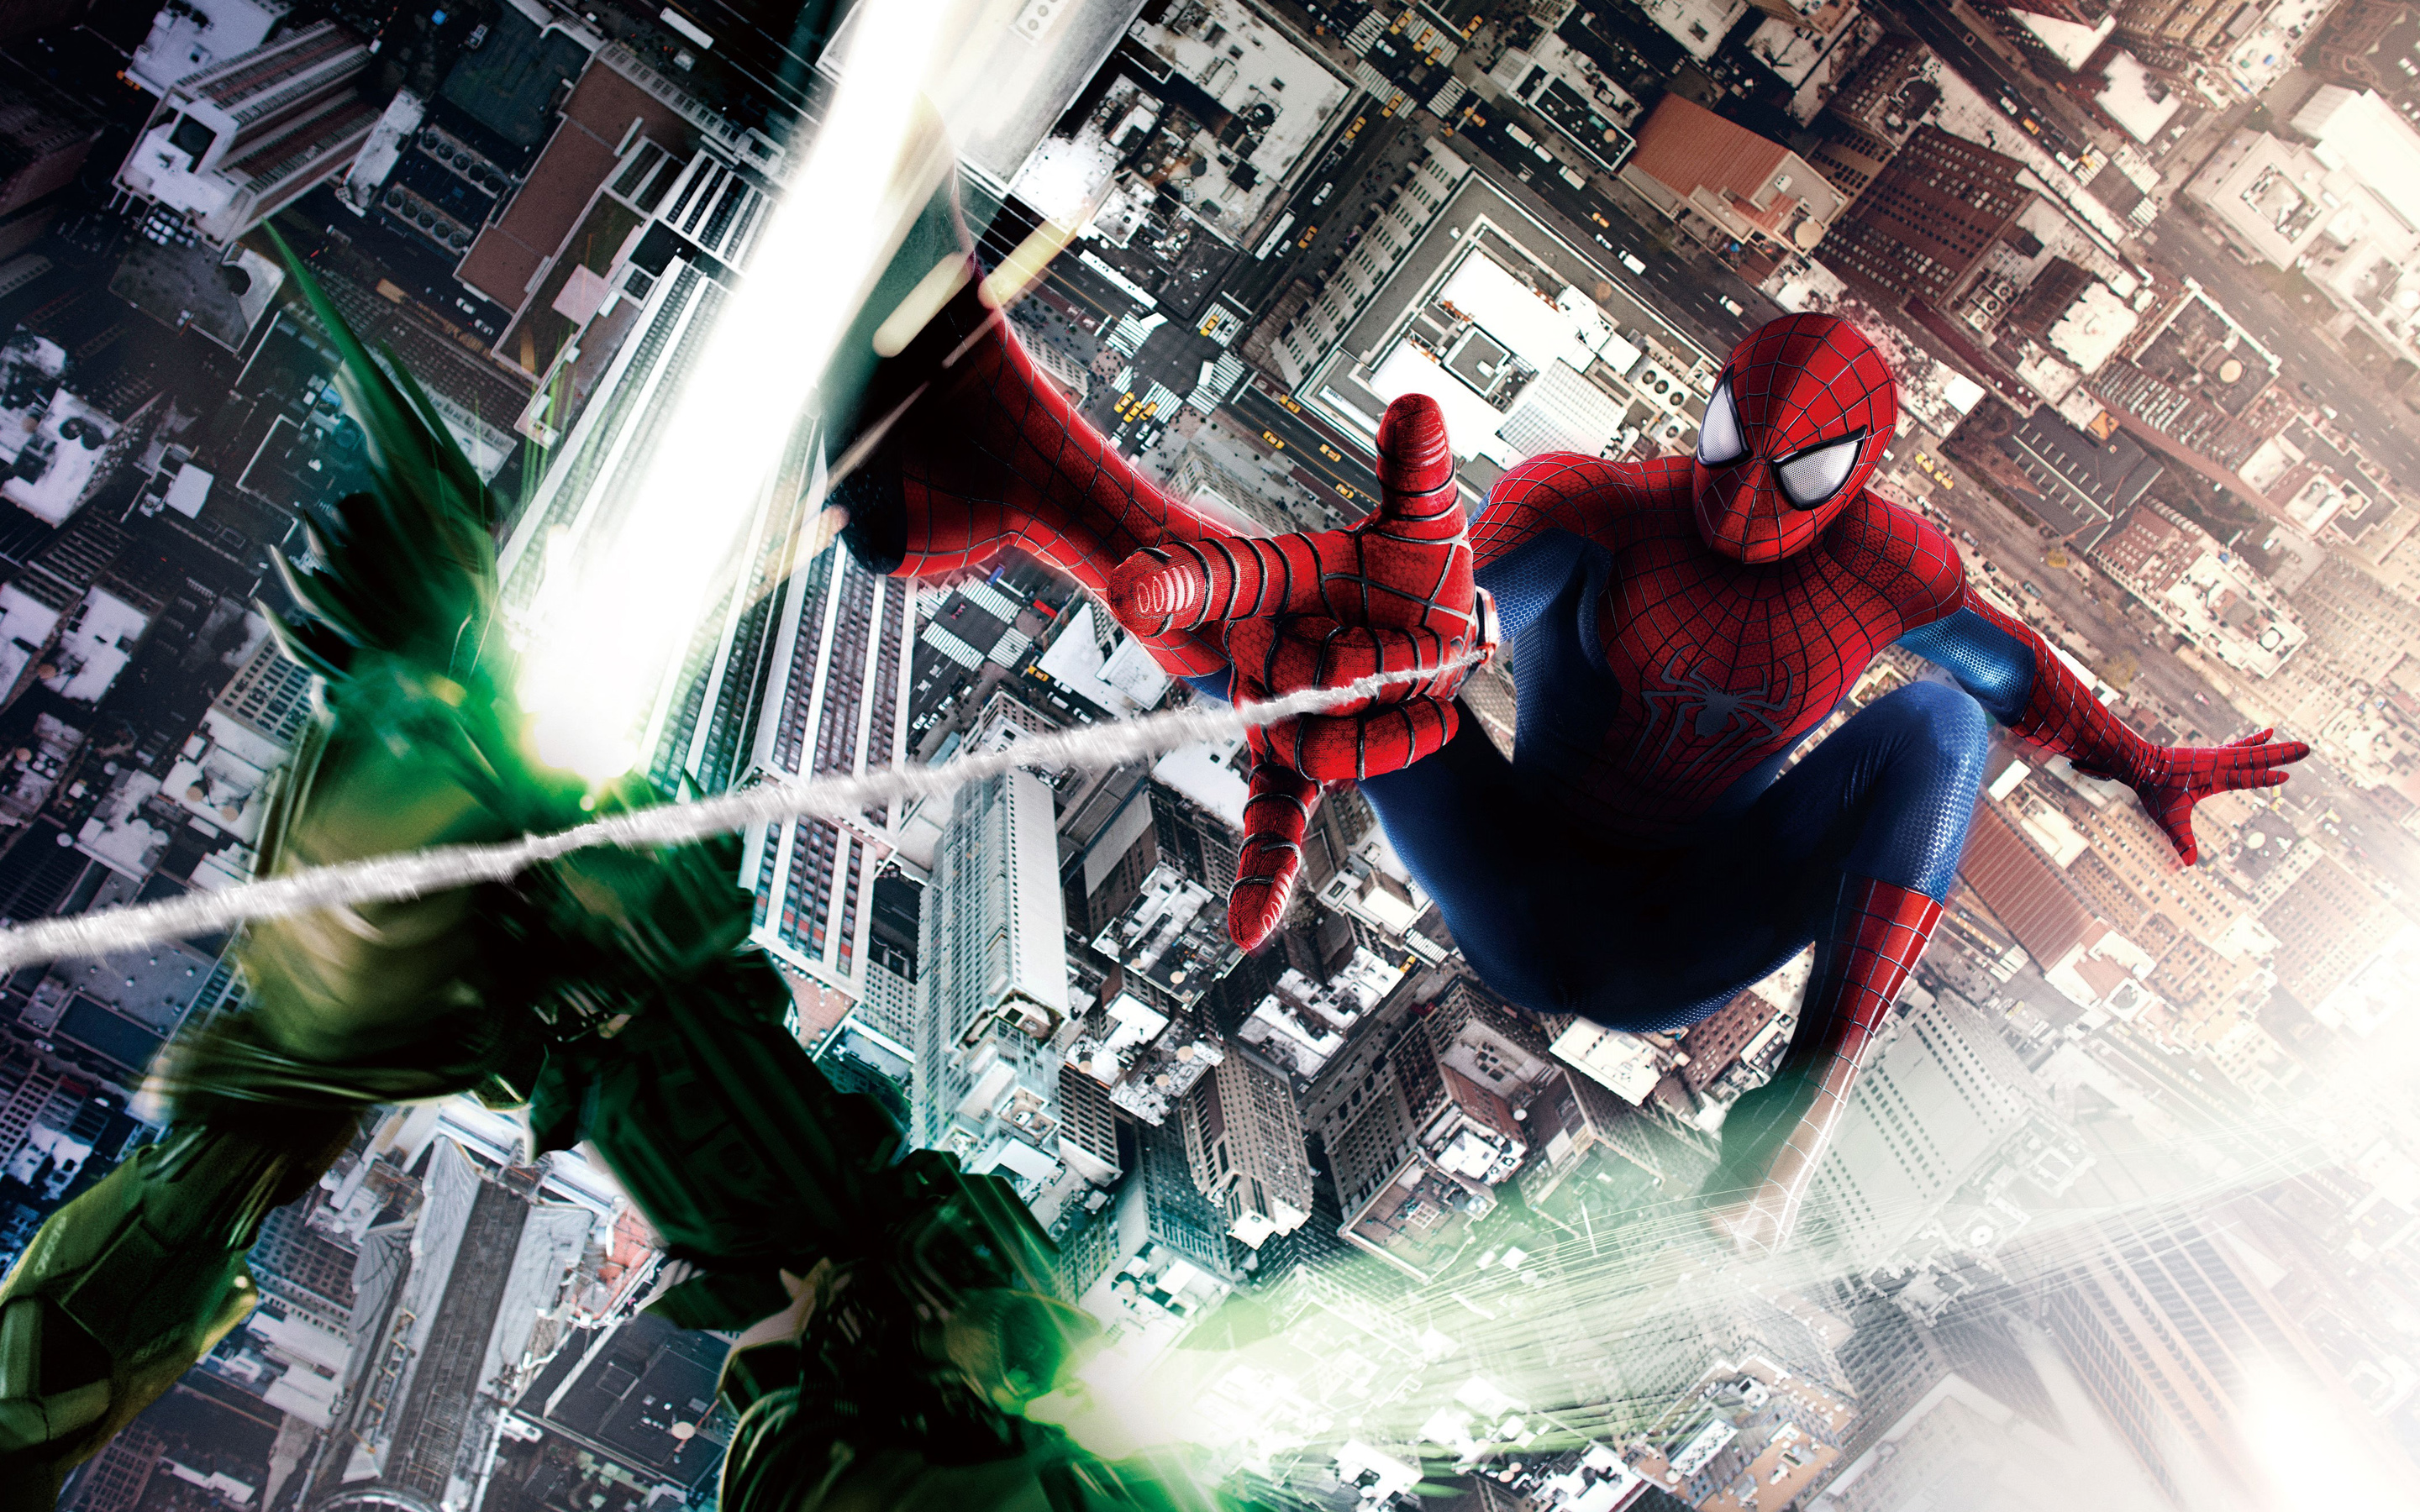 The Amazing Spider-man 2 Wallpaper | Free HD Desktop Wallpapers ...